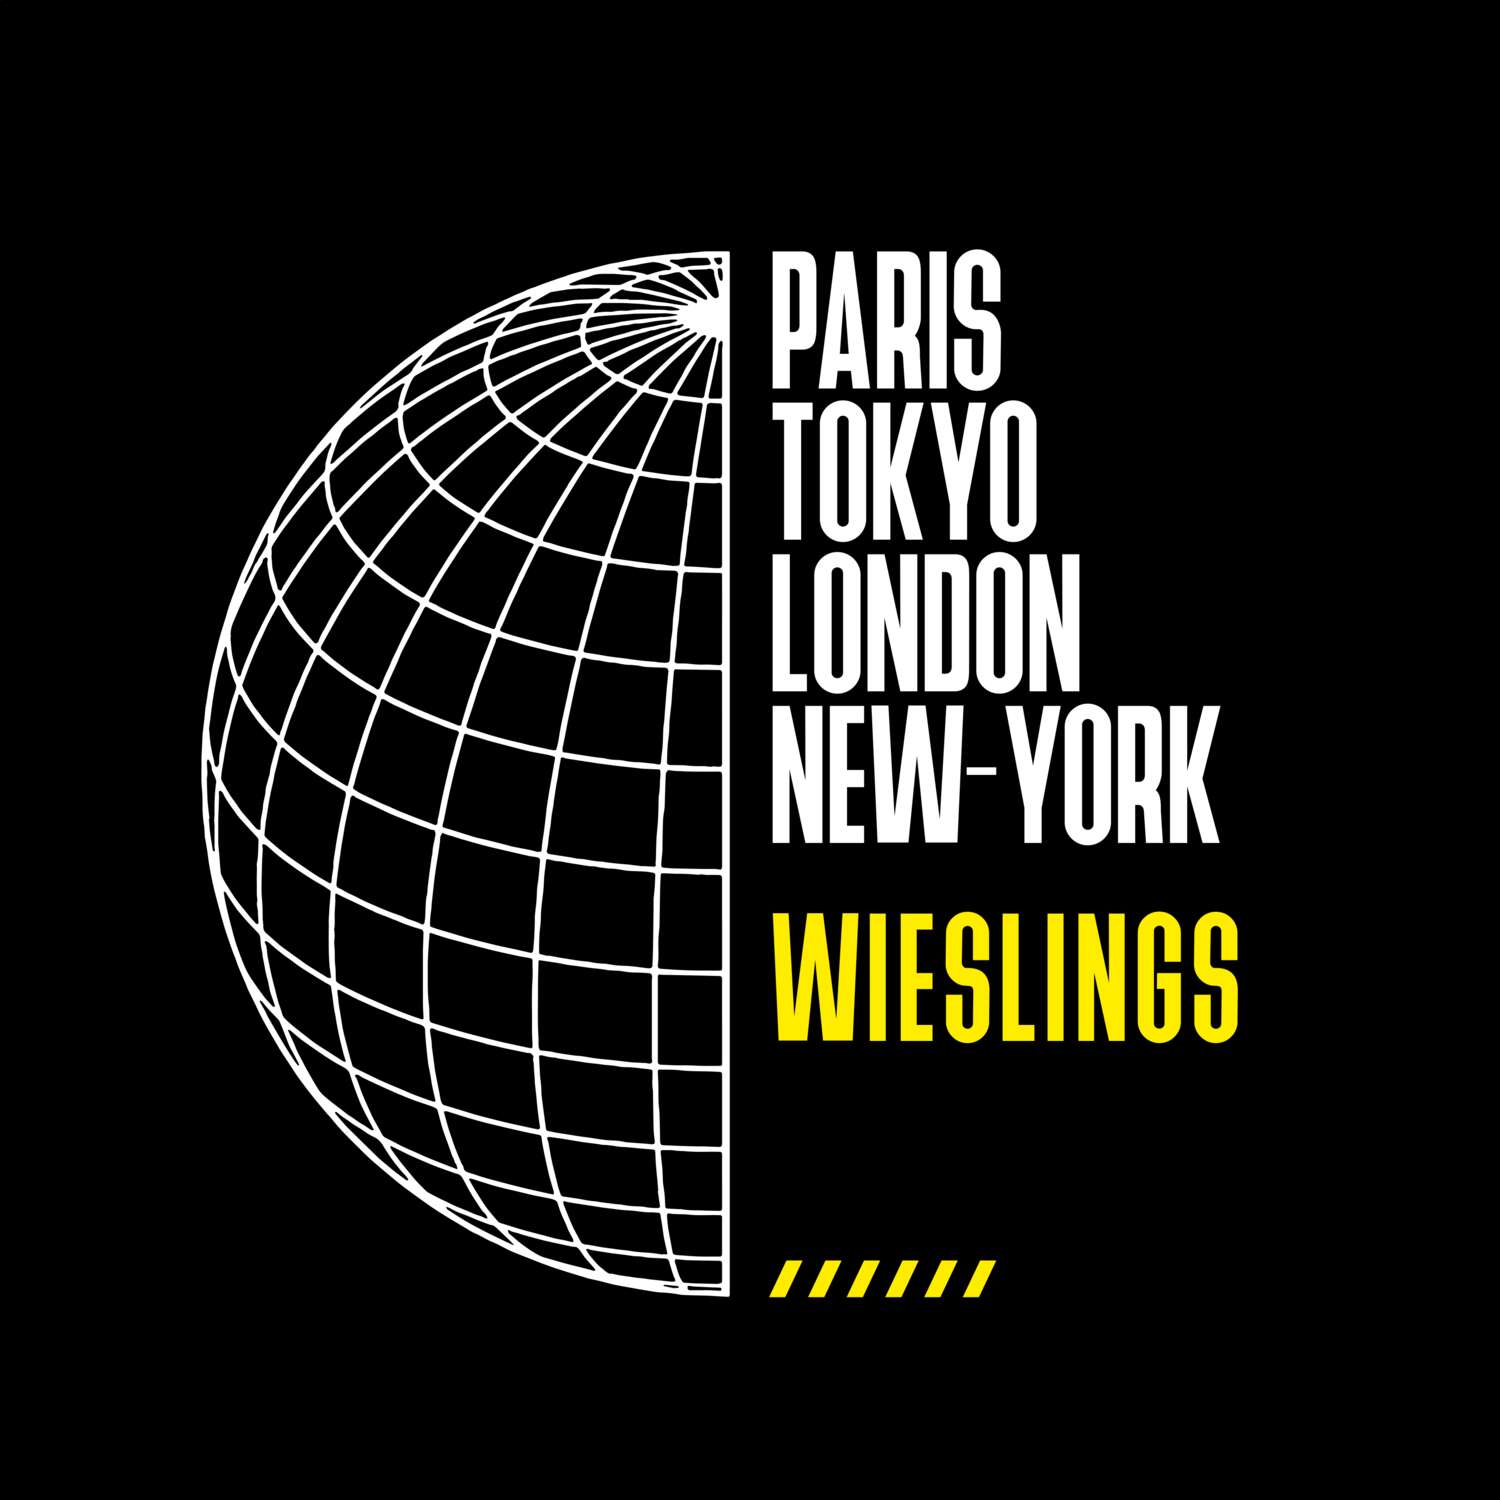 Wieslings T-Shirt »Paris Tokyo London«